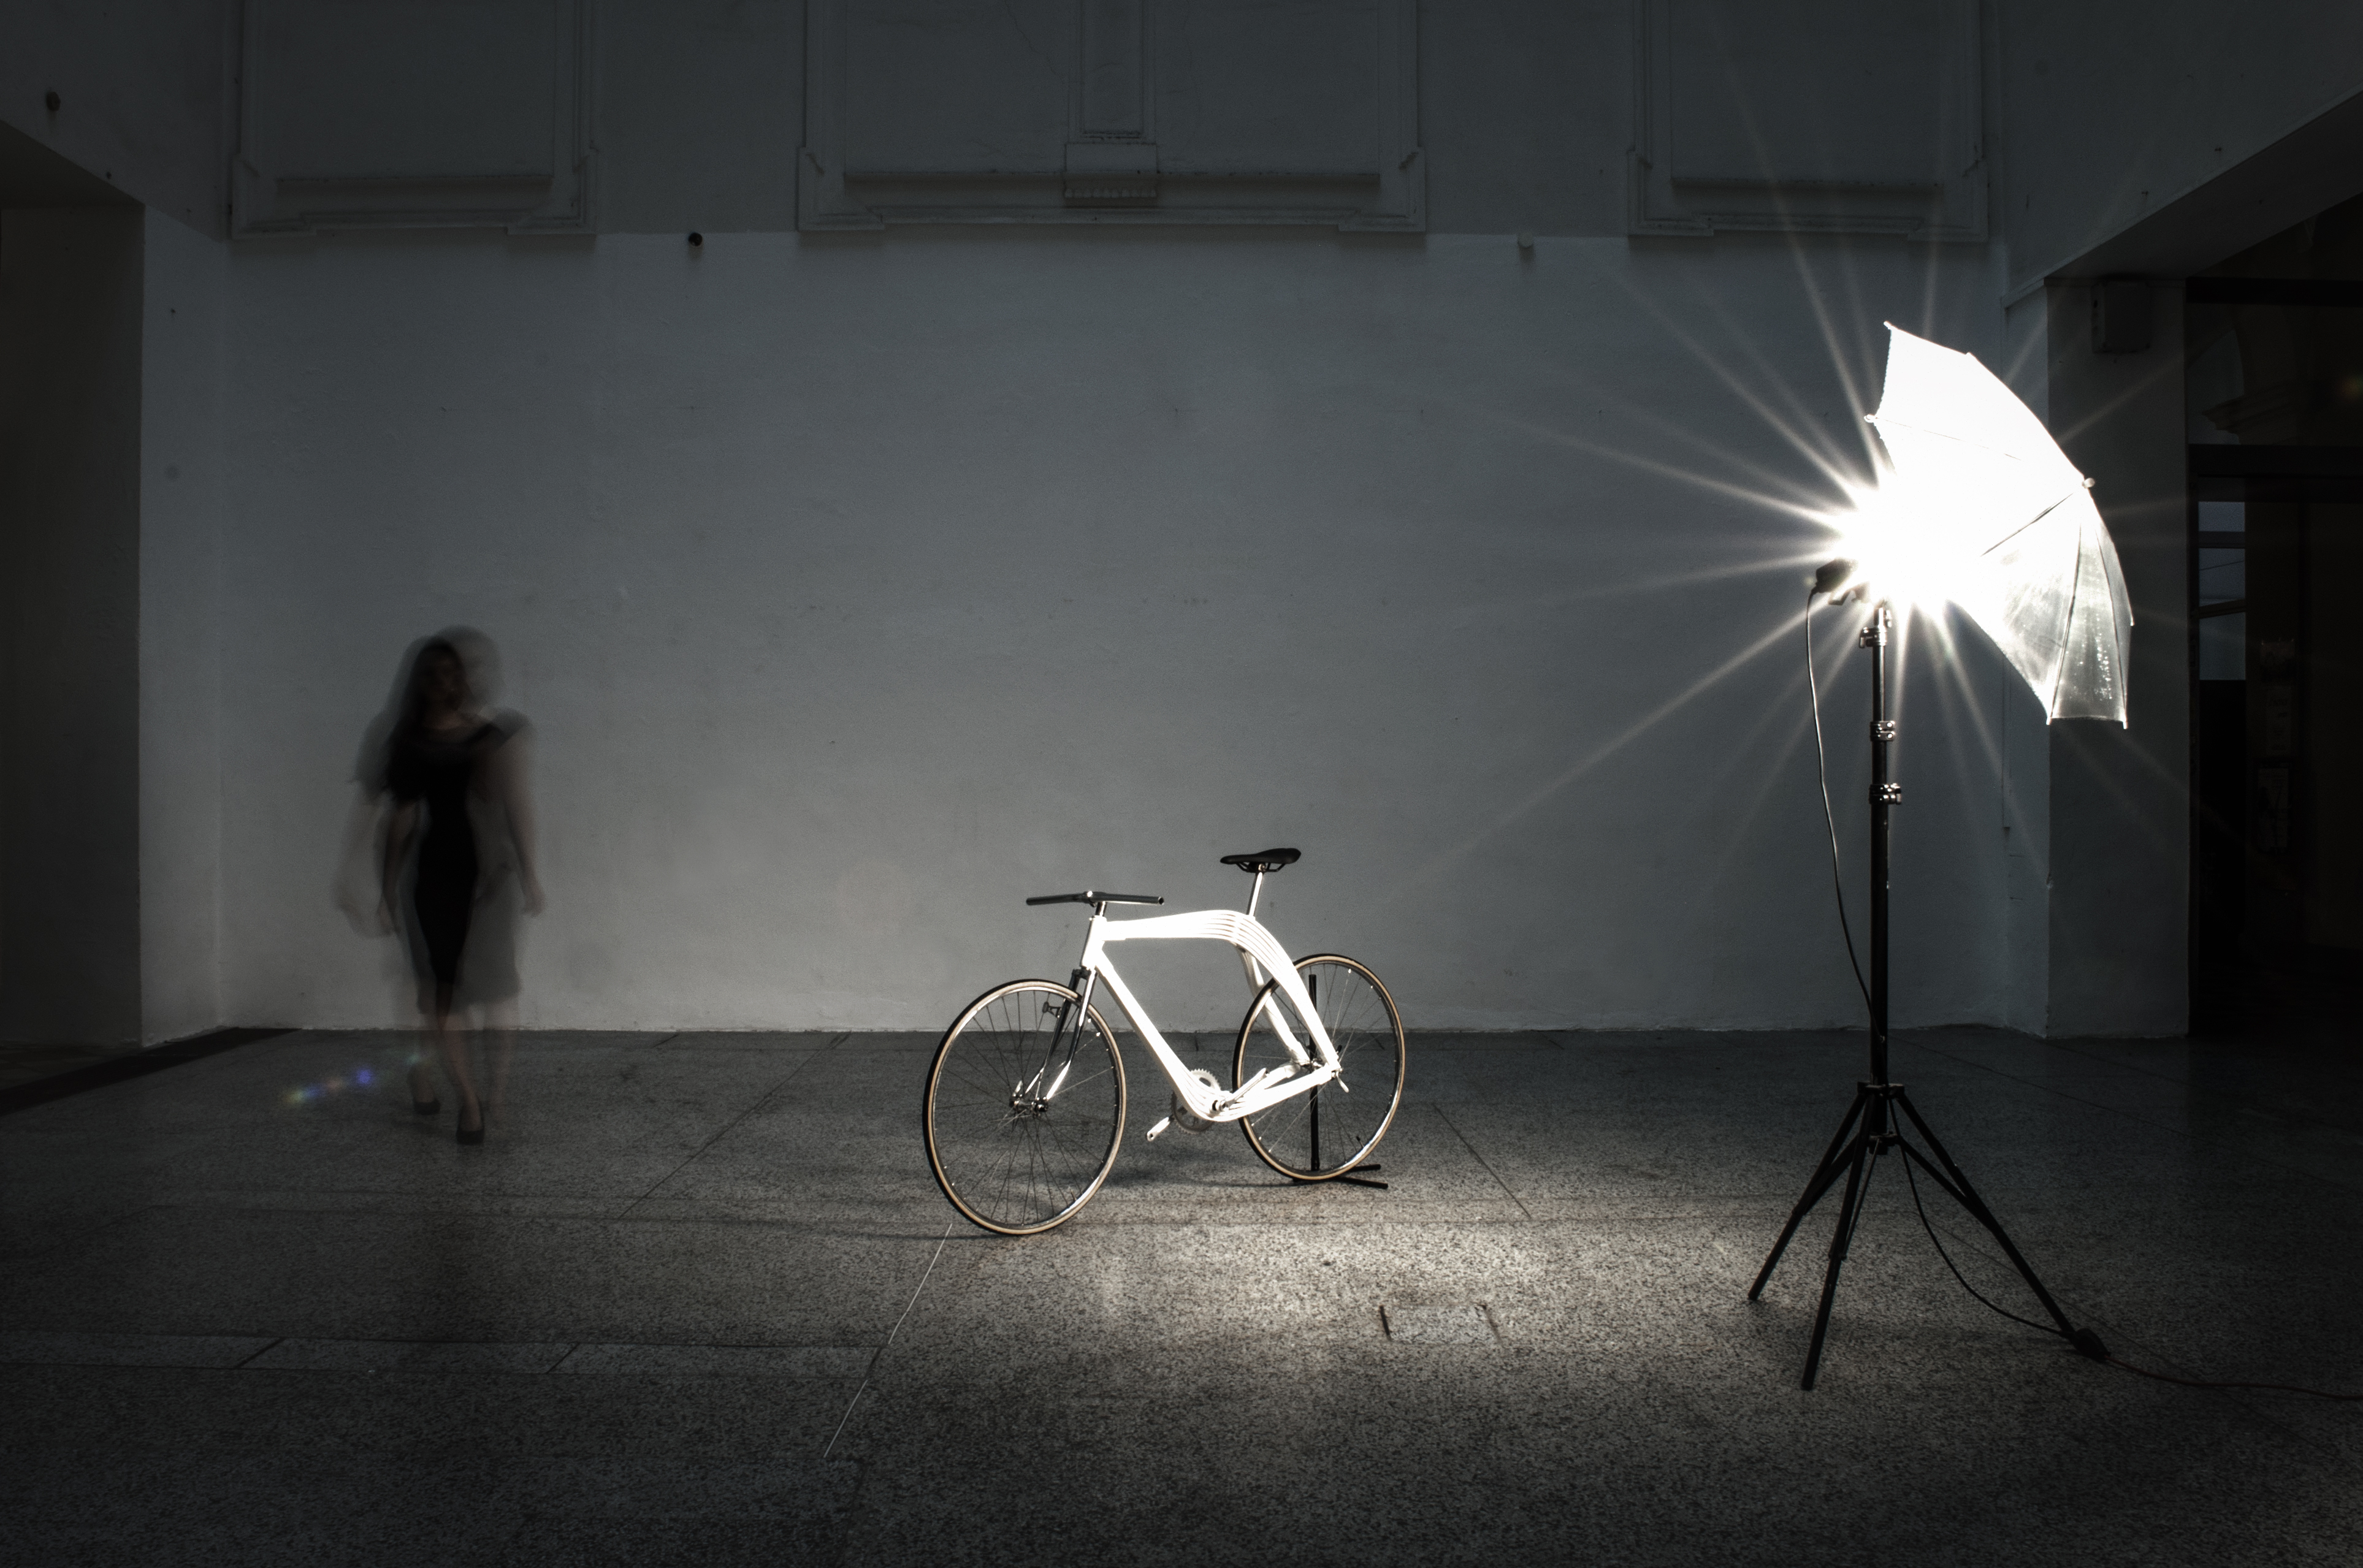 The bike in a photostudio